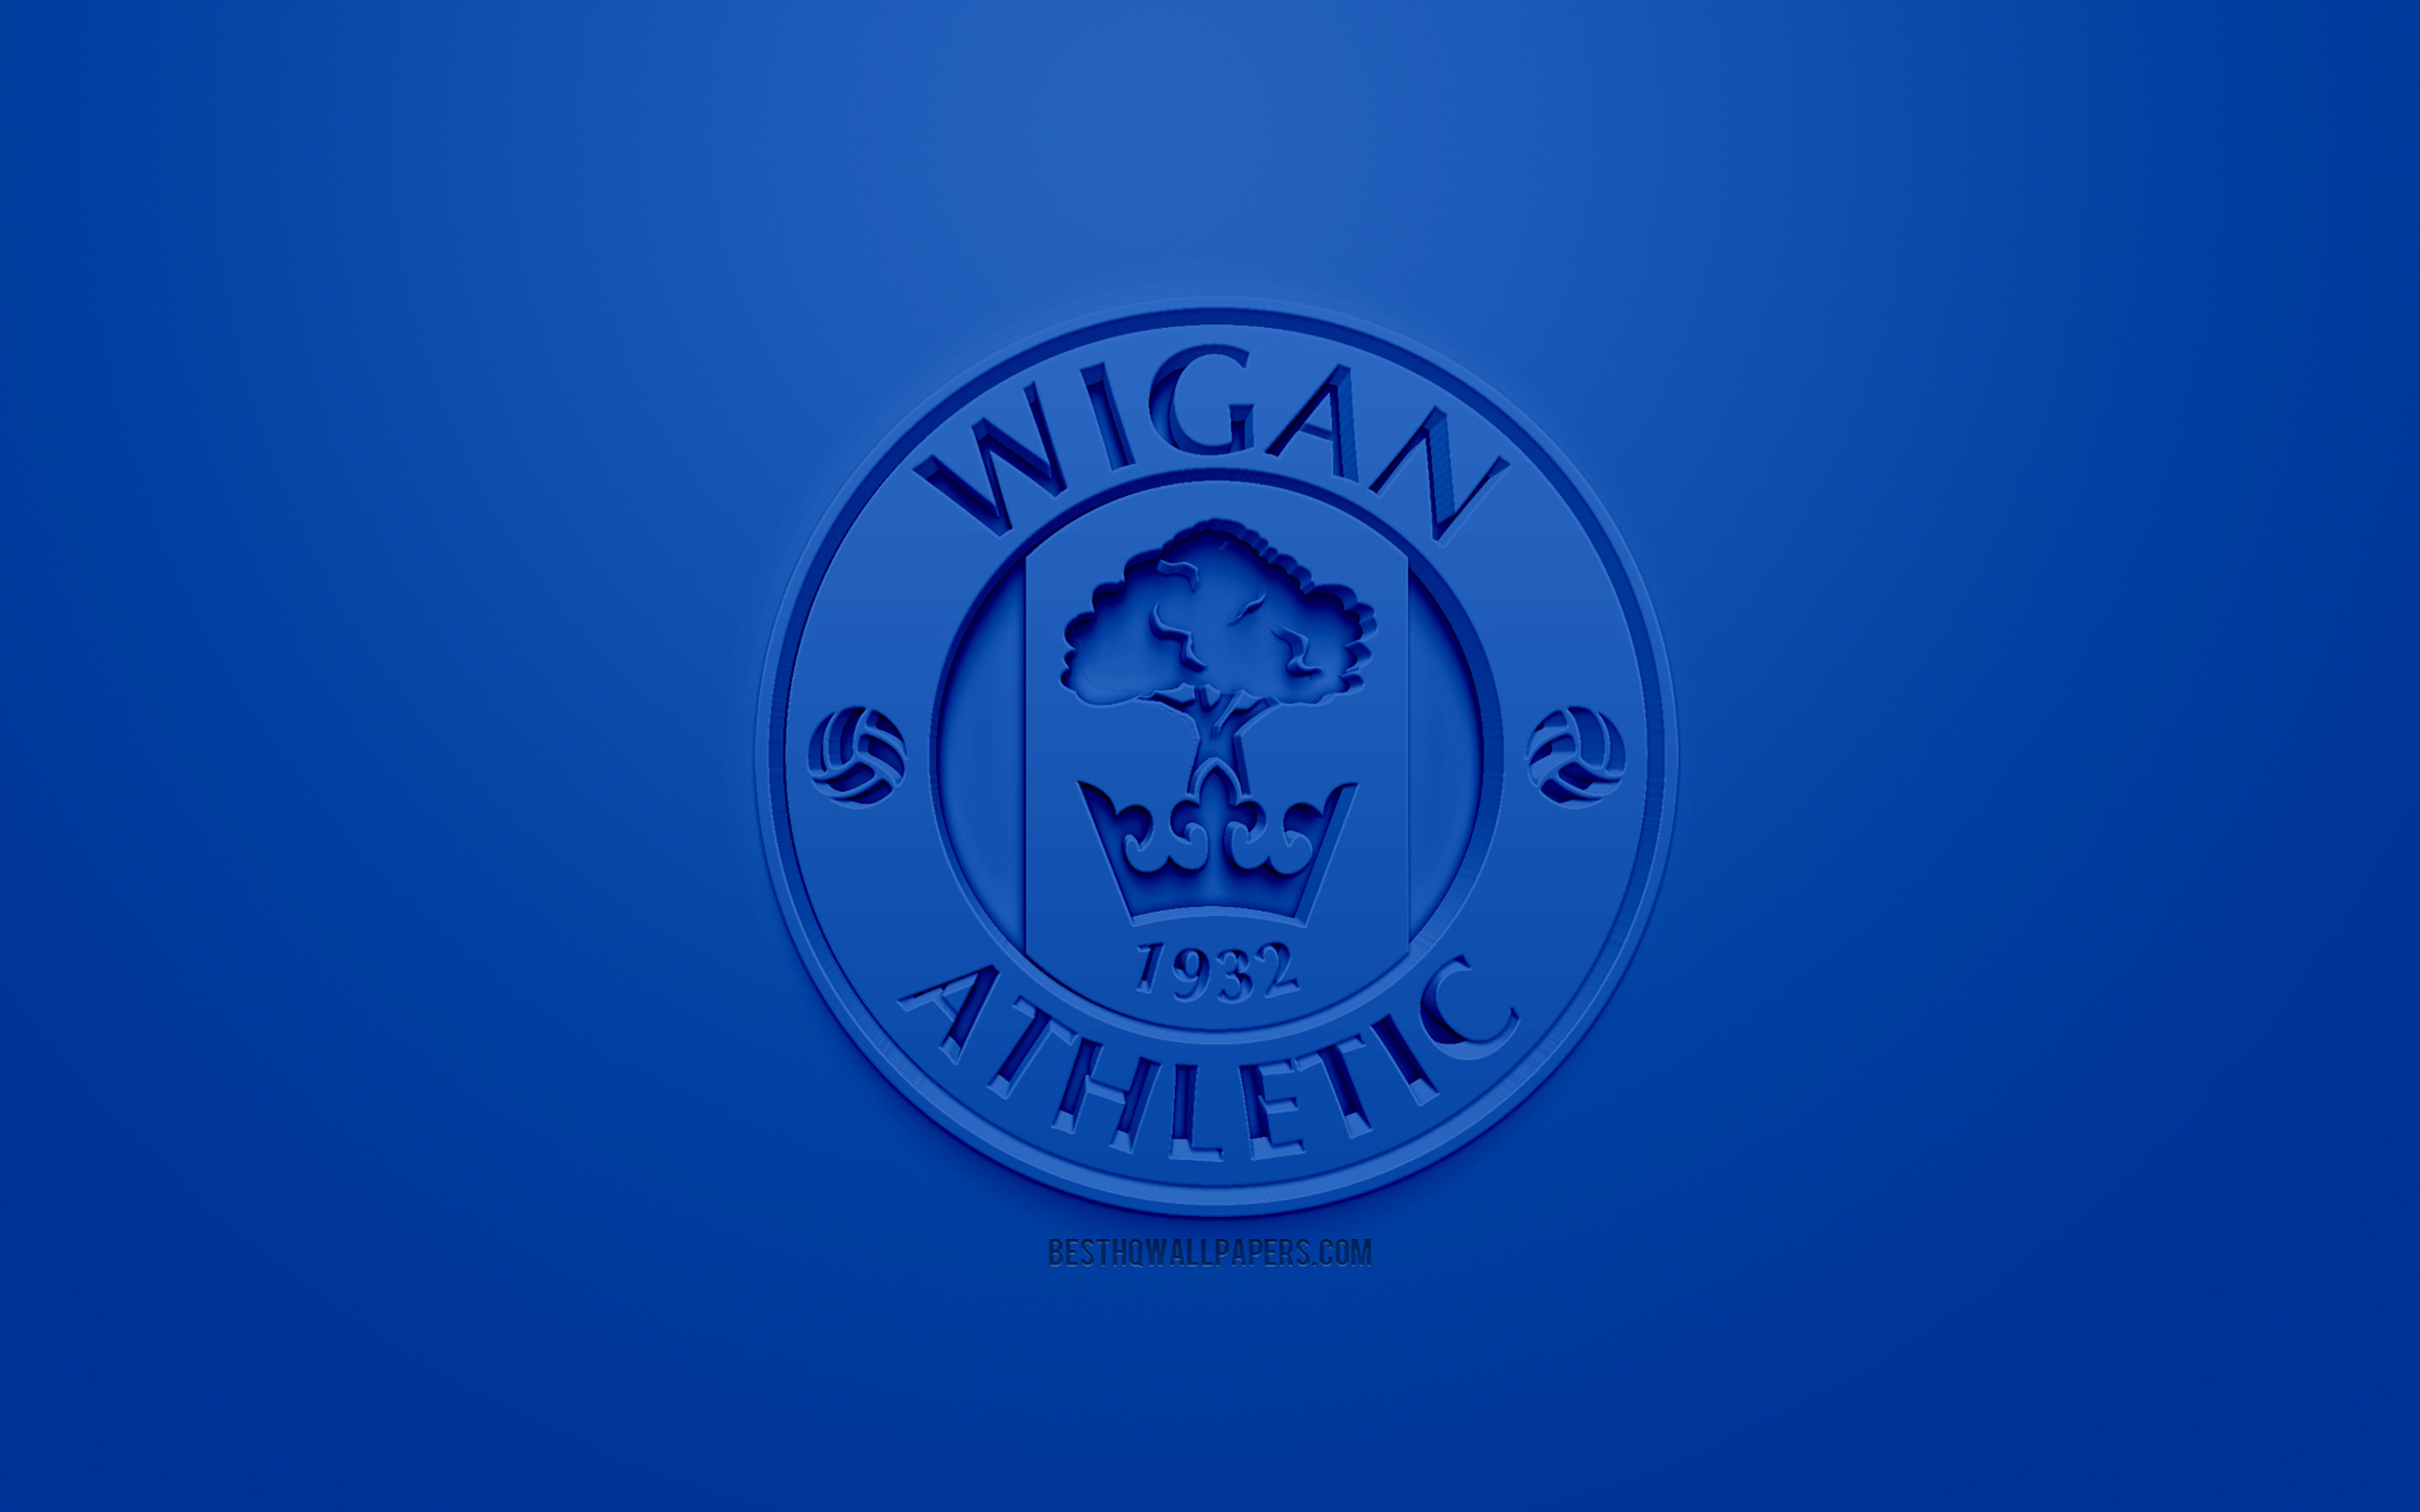 Download wallpaper Wigan Athletic FC, creative 3D logo, blue background, 3D emblem, English football club, EFL Championship, Wigan, England, United Kingdom, English Football League Championship, 3D art, football, 3D logo for desktop